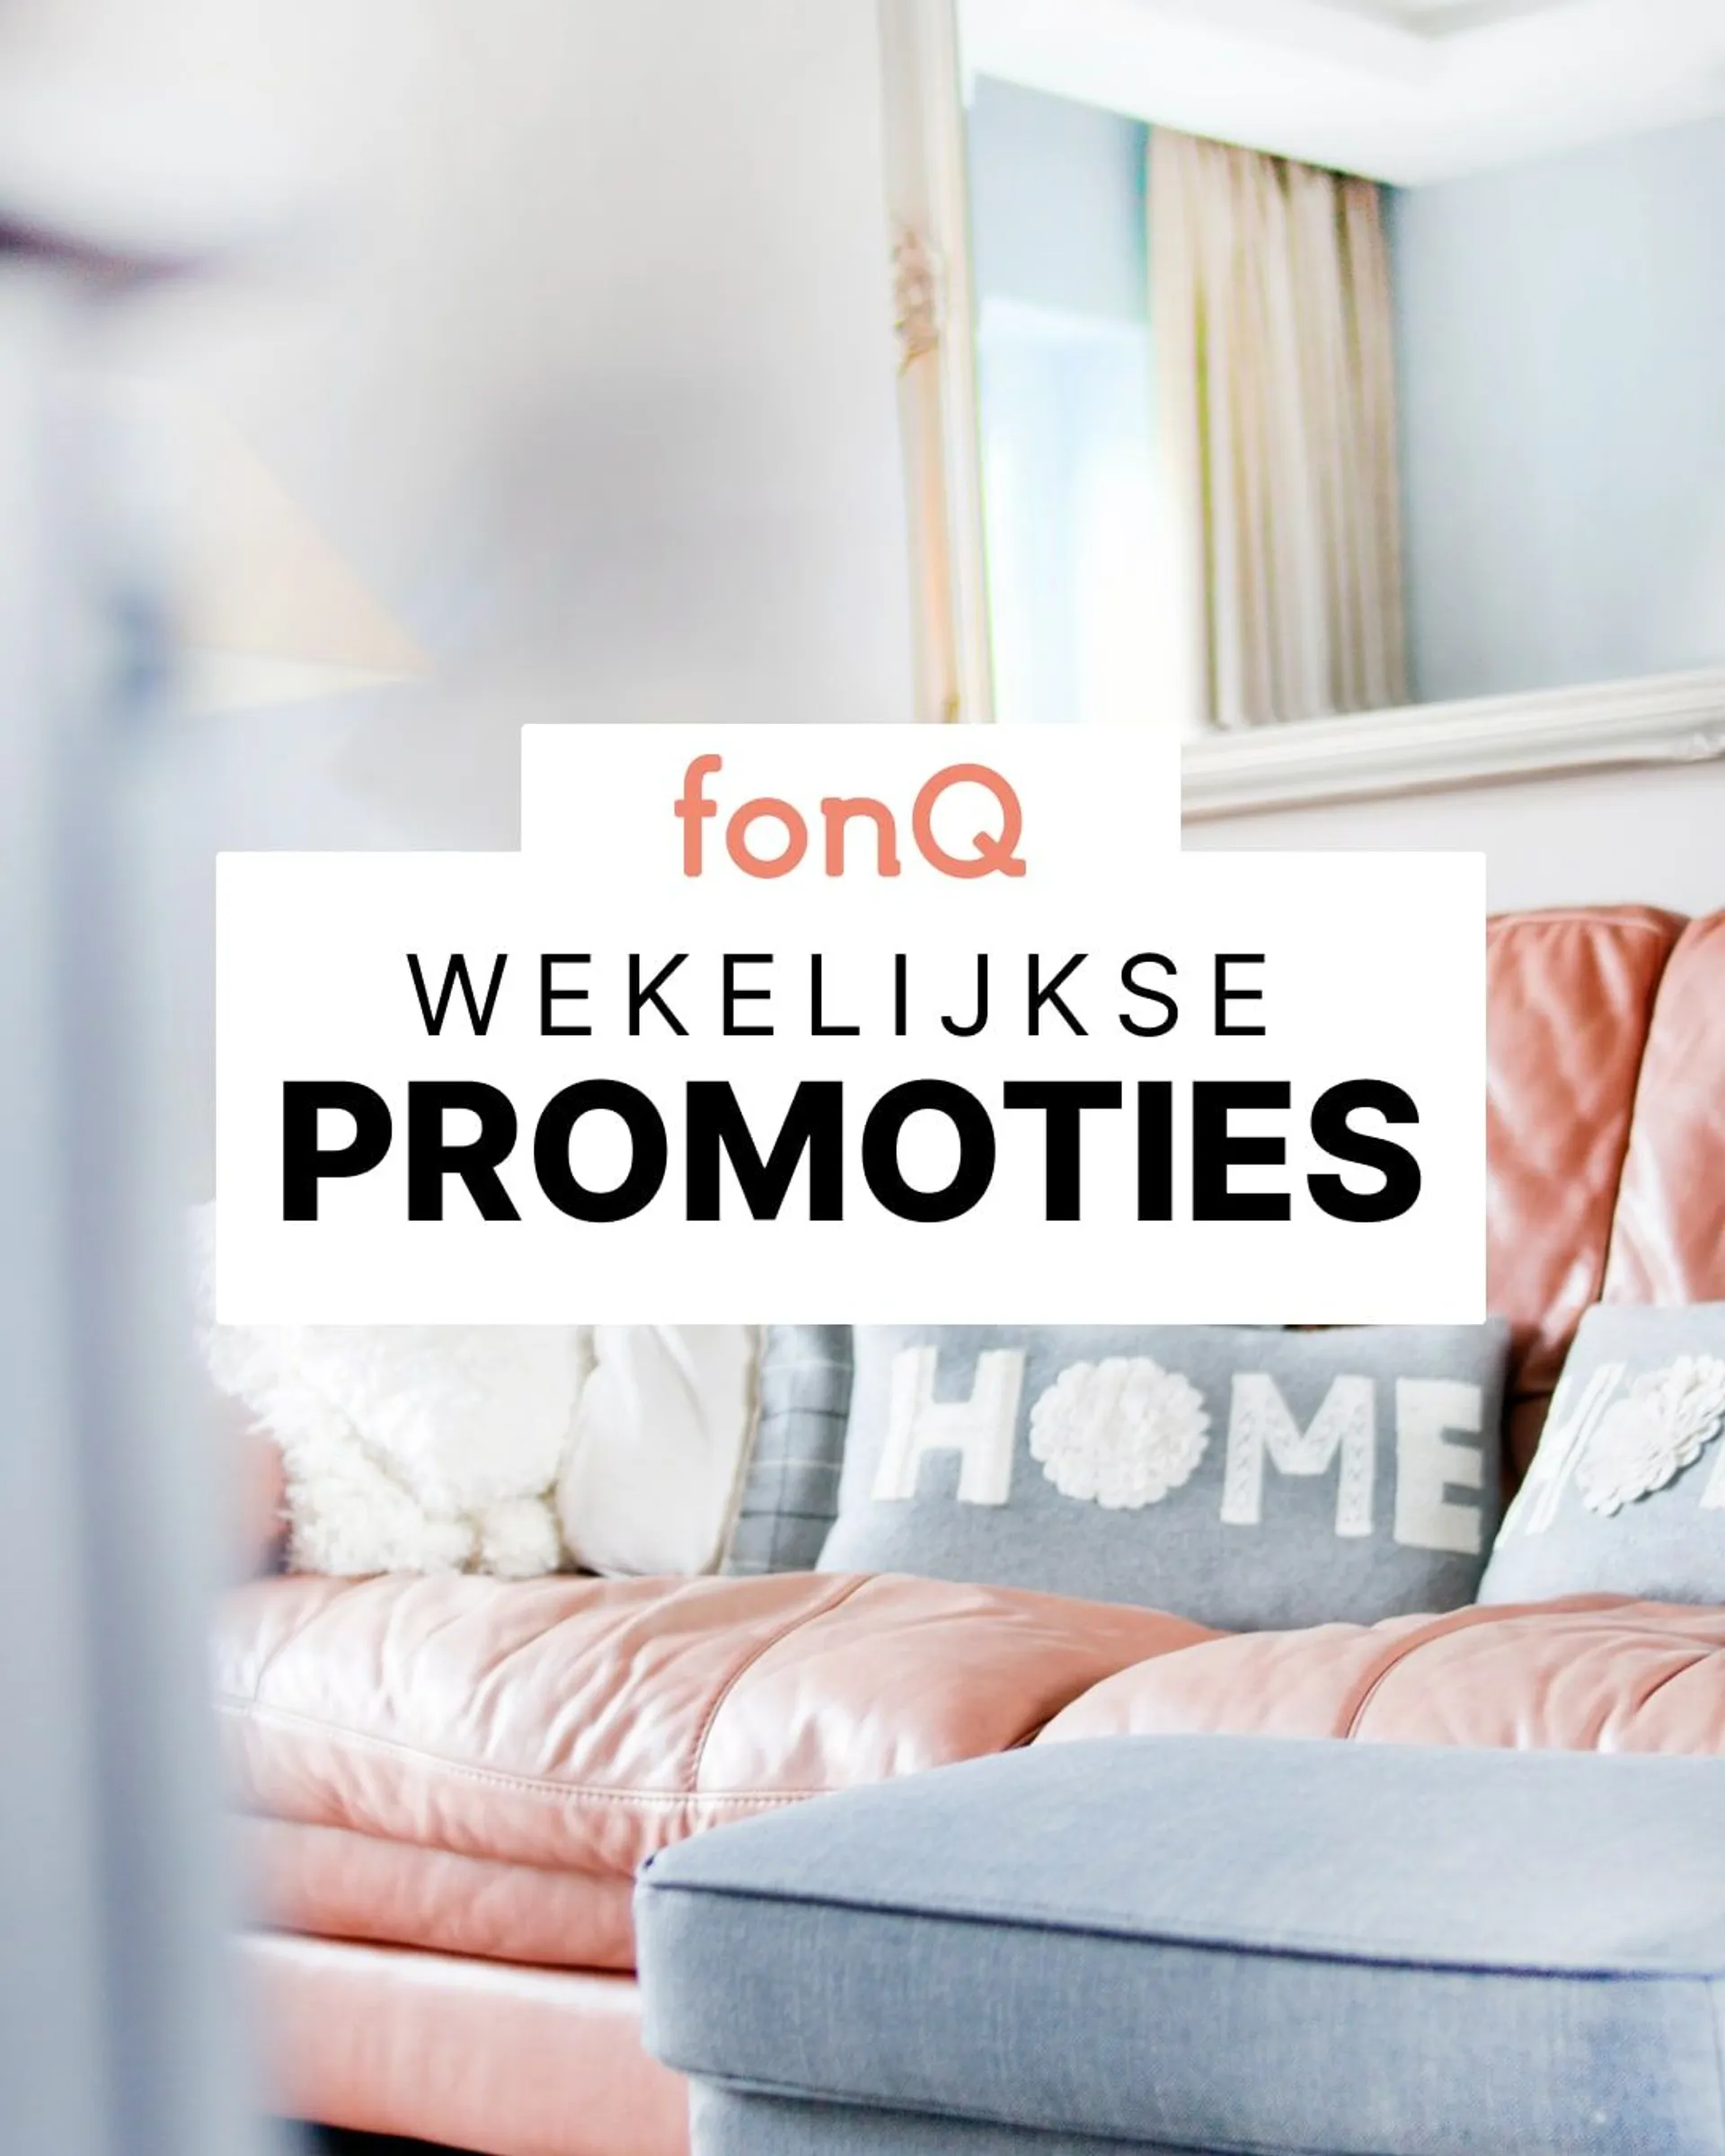 fonQ - Producten in verkoop van 1 februari tot 6 februari 2023 - Folder pagina 1